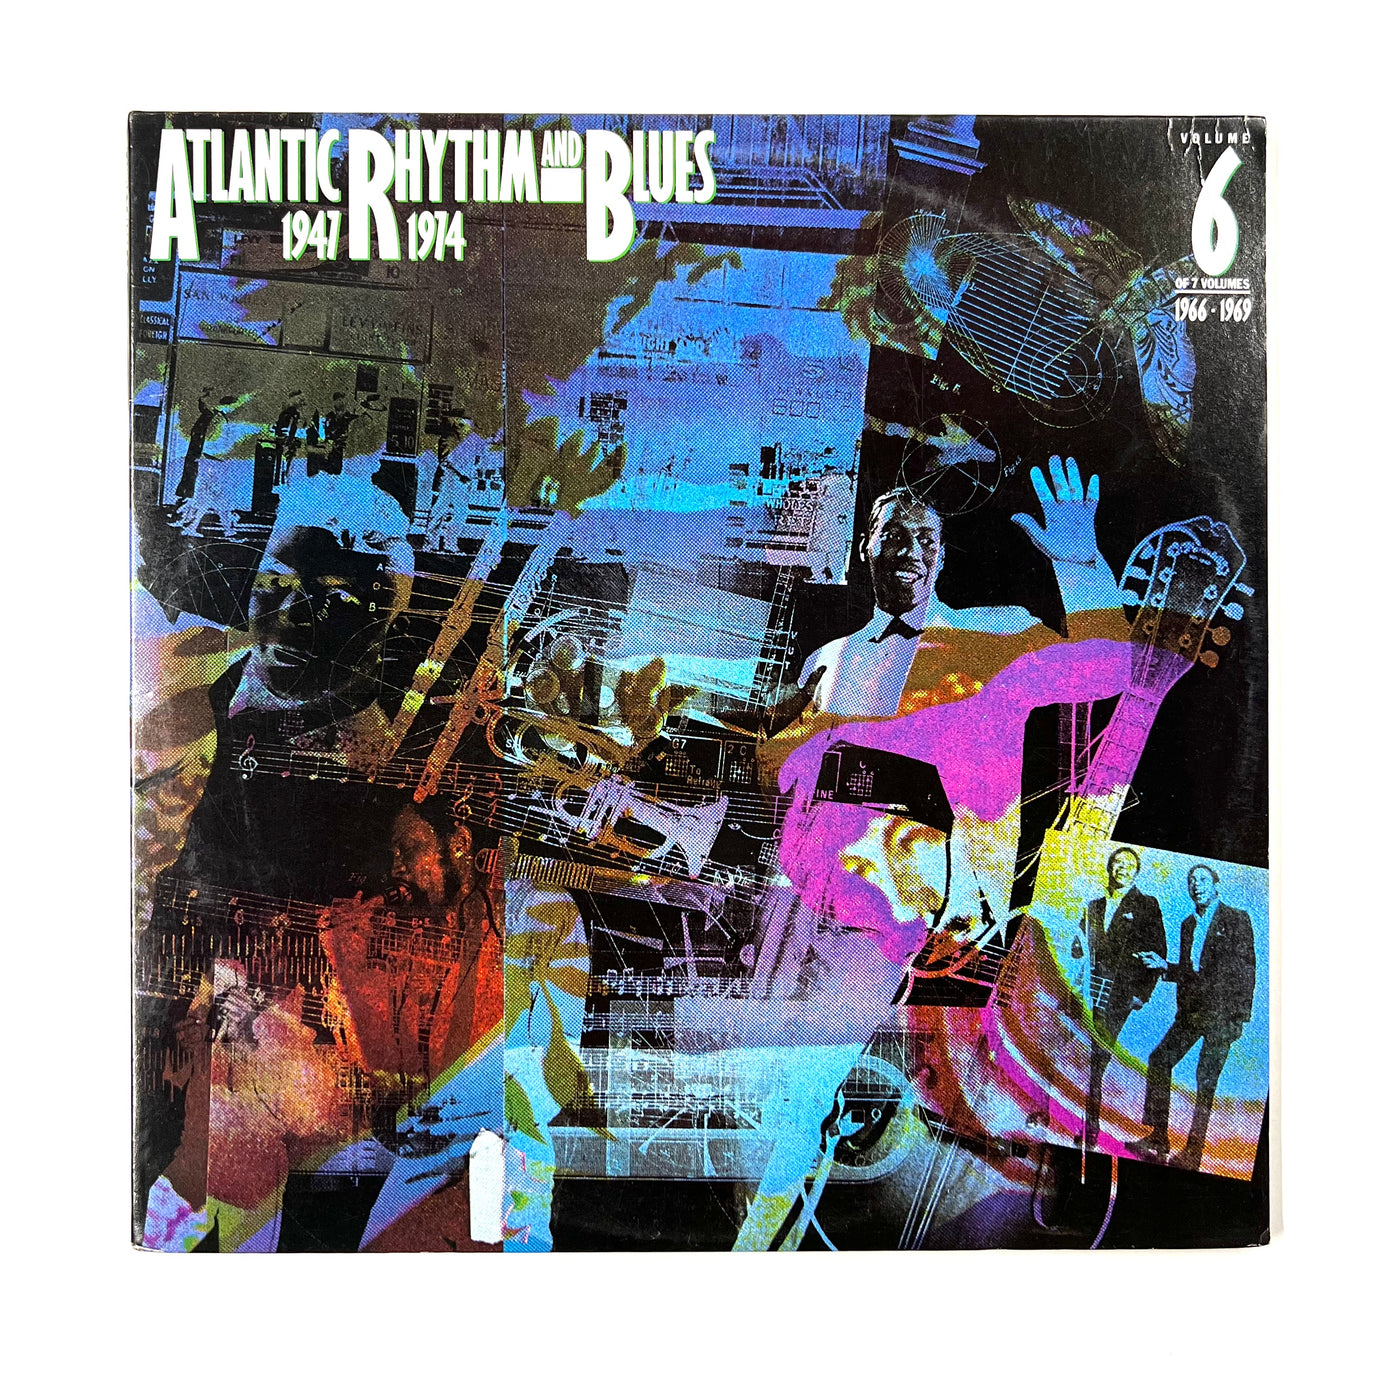 Various - Atlantic Rhythm & Blues 1947-1974 (Volume 6 1966-1969)